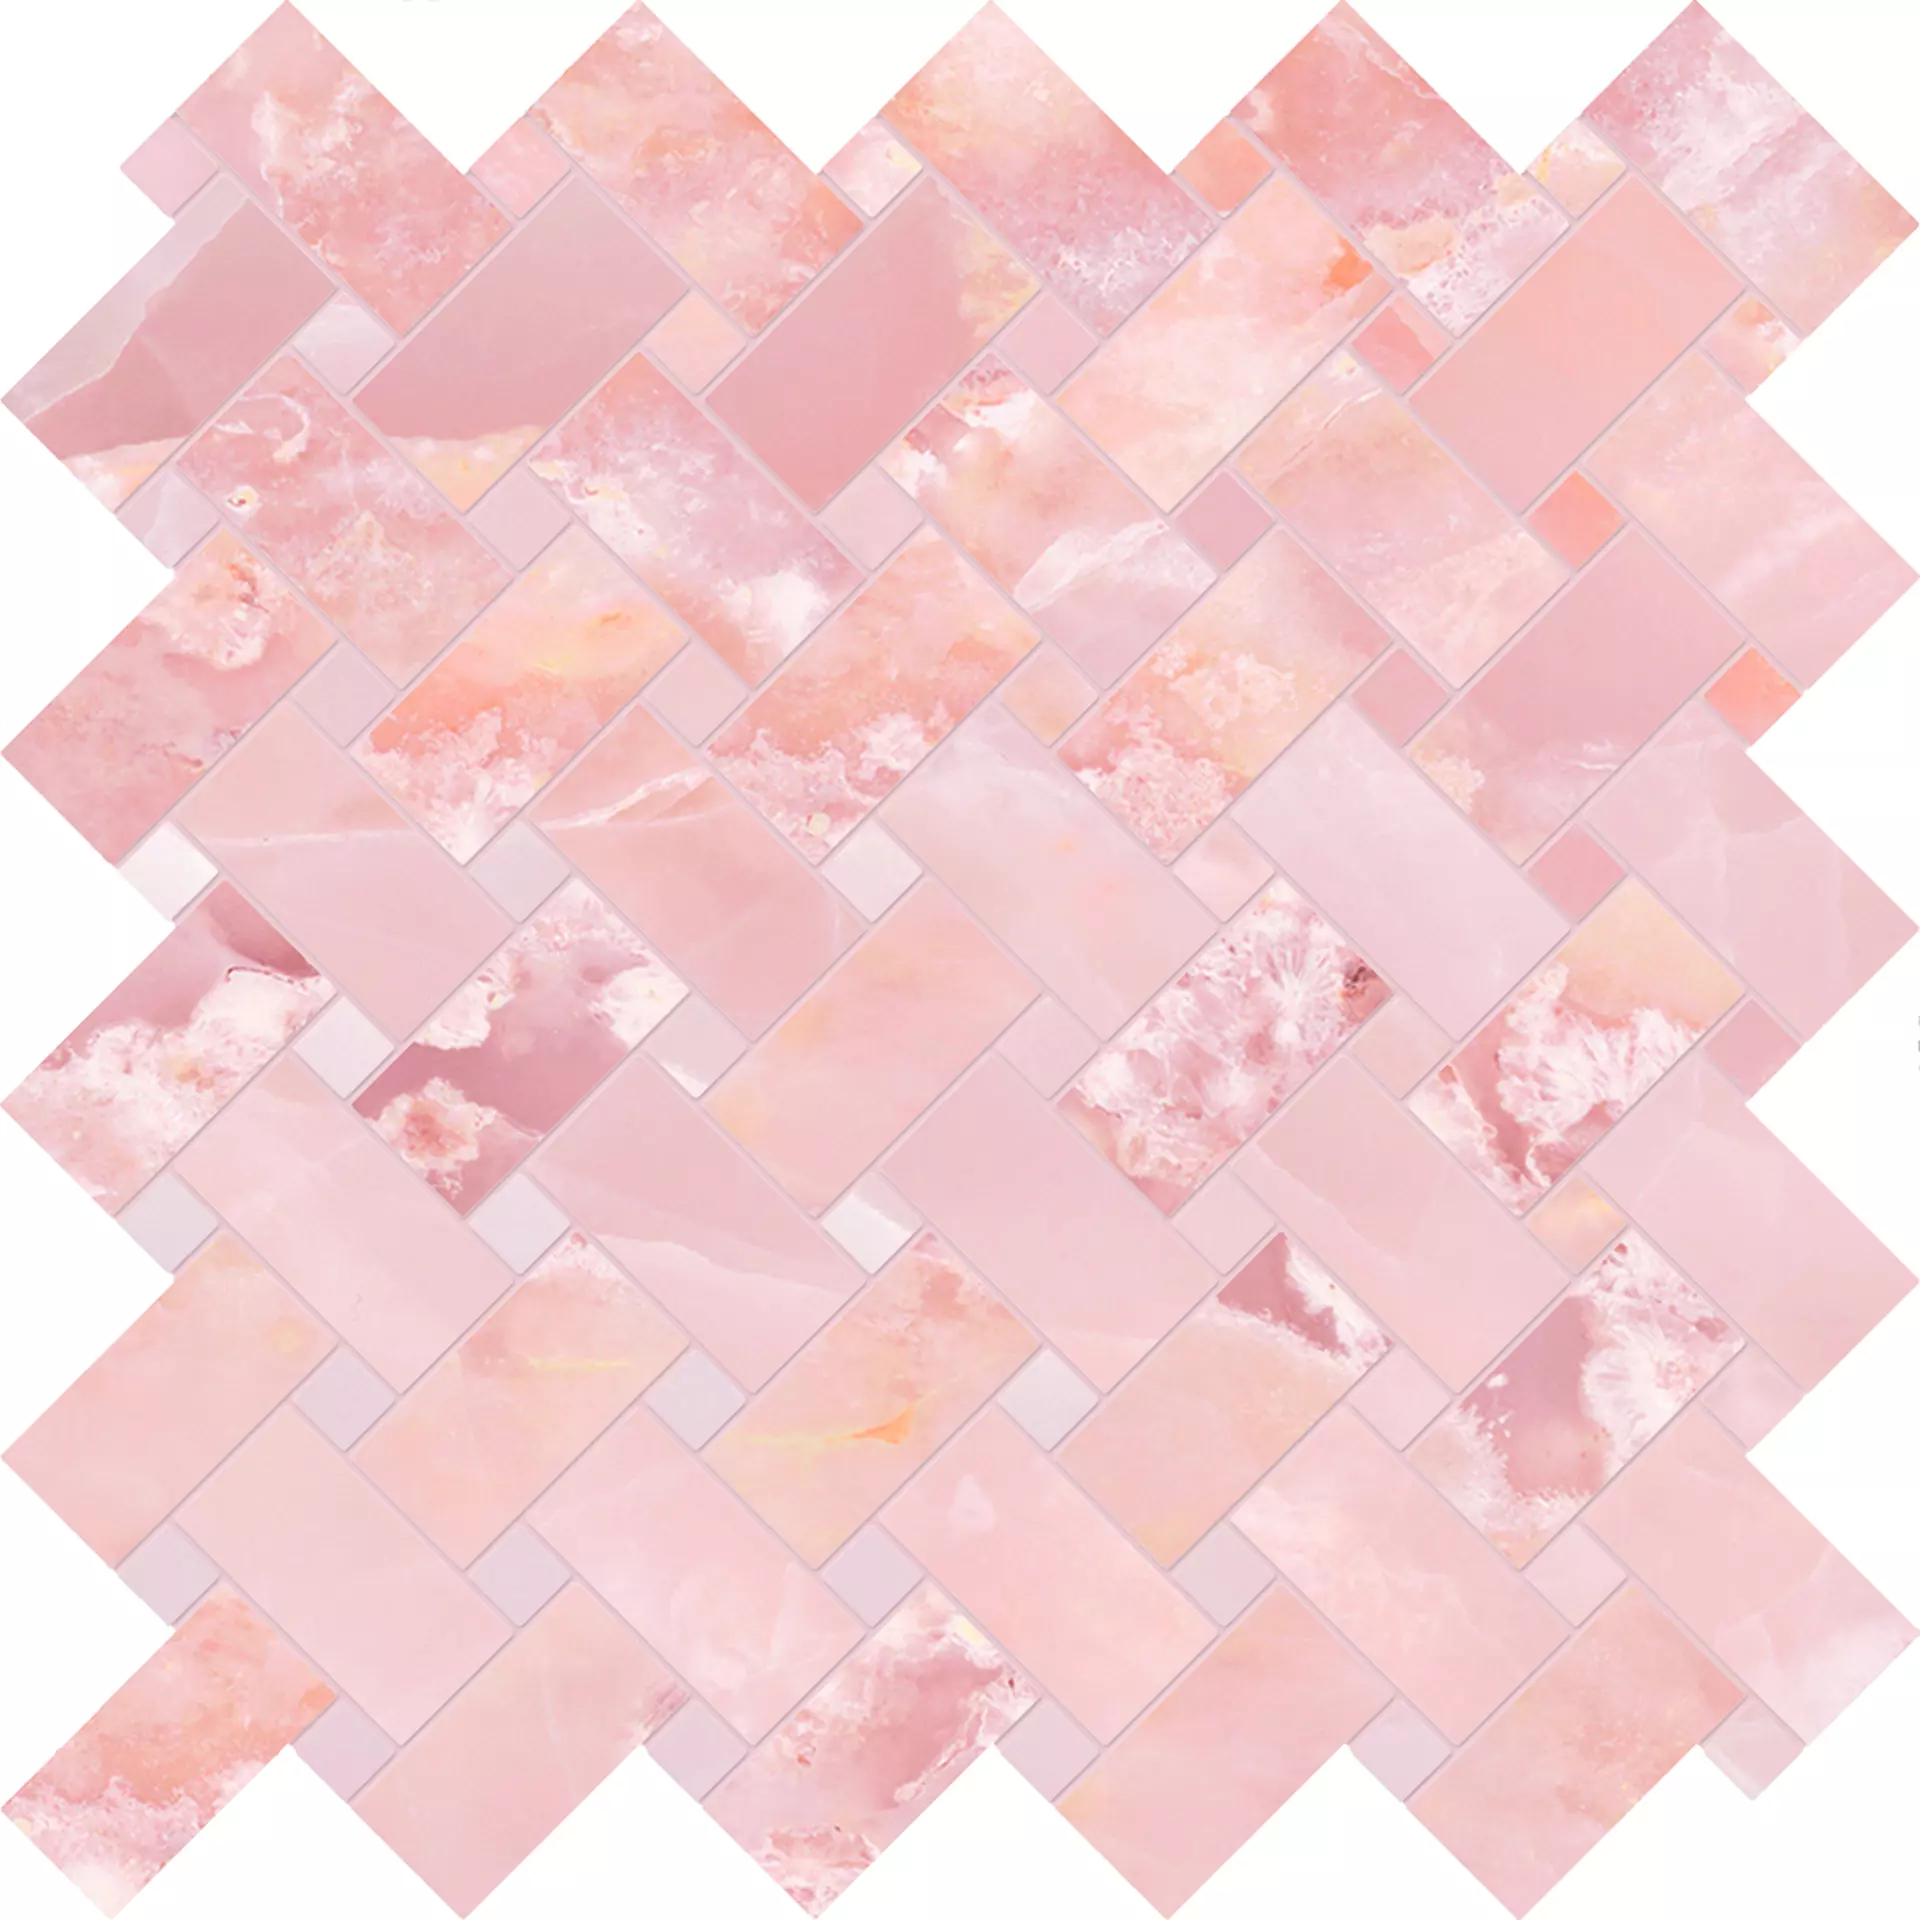 Emilceramica Tele Di Marmo Onyx Pink Silktech Pink EKZJ silk 30x30cm Mosaik Intrecci 9,5mm